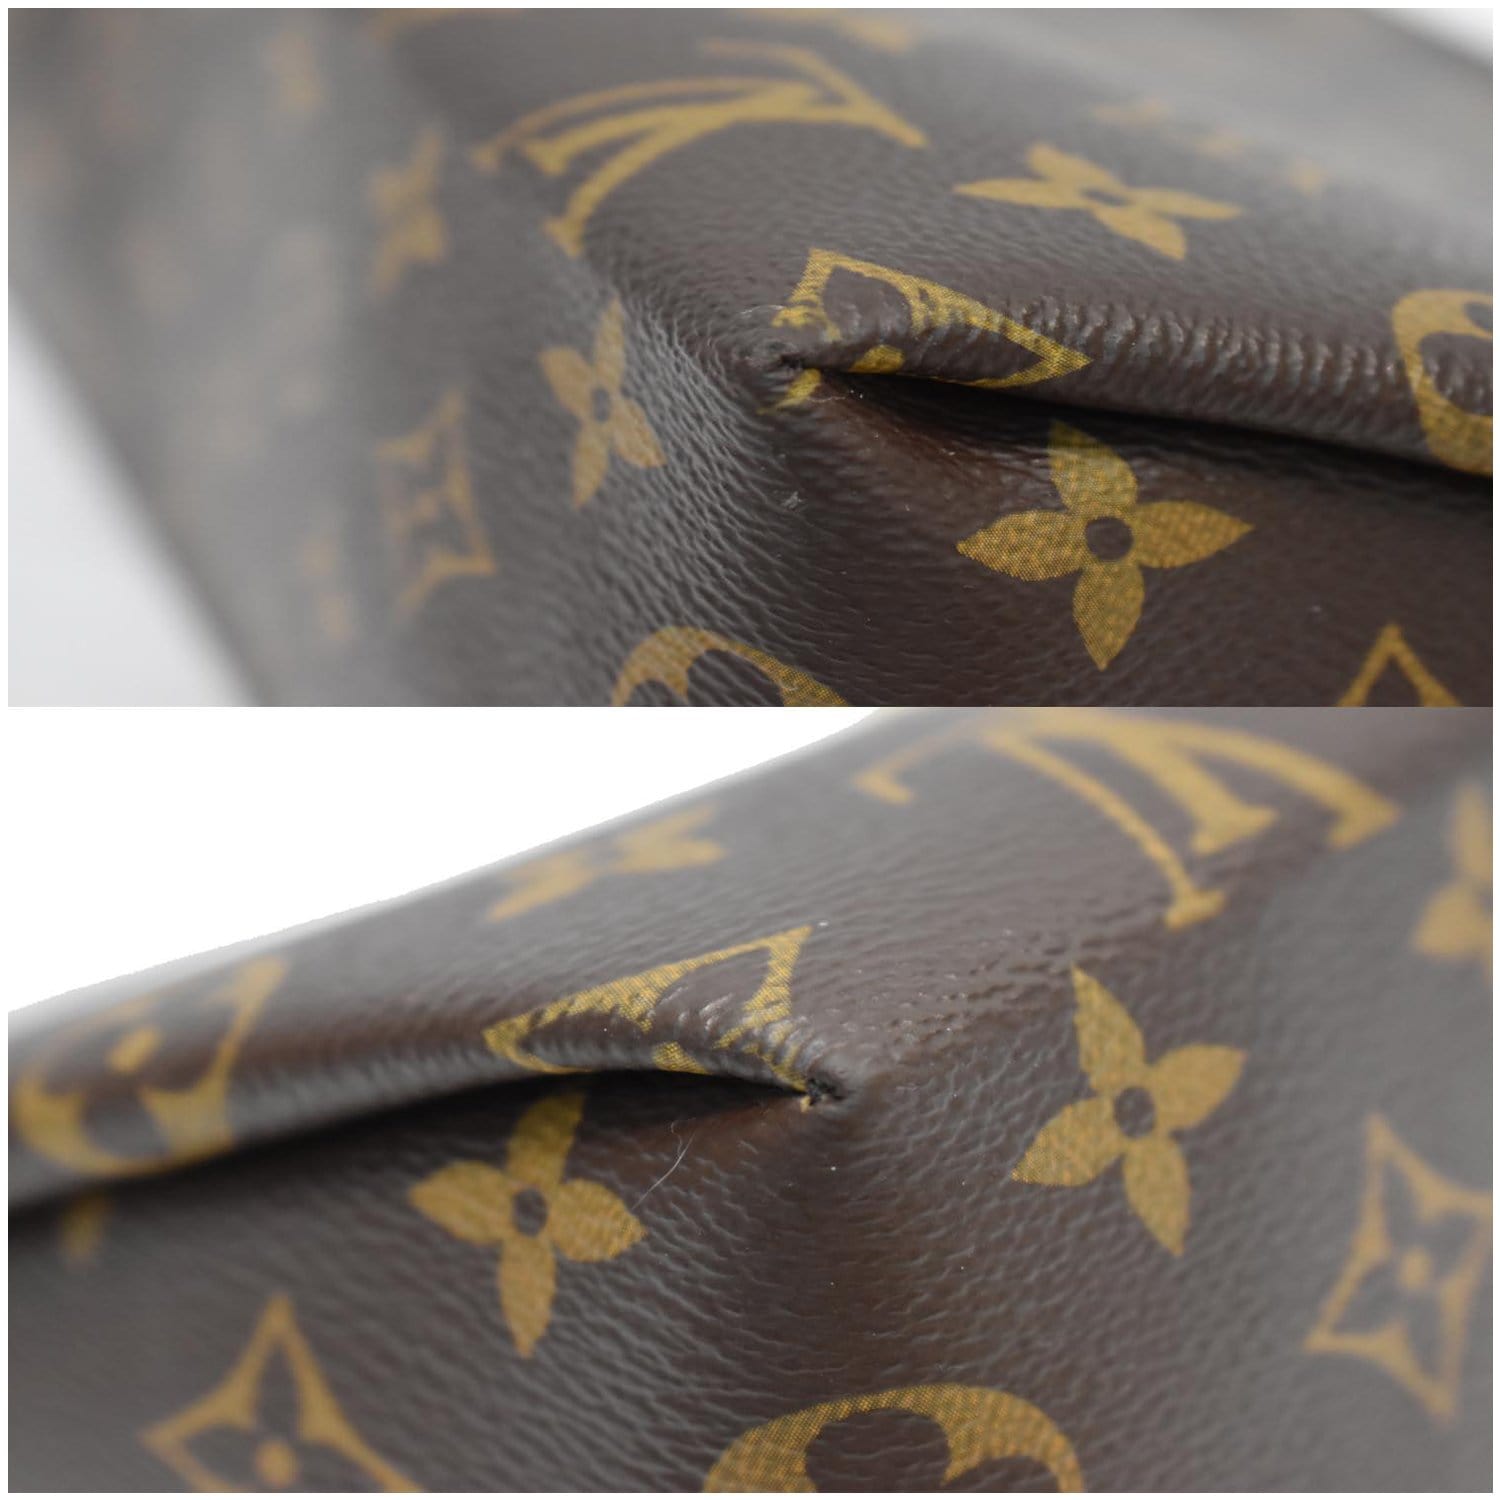 Louis Vuitton Pallas Beauty Case M64123 M64124 M64125 – Replica5